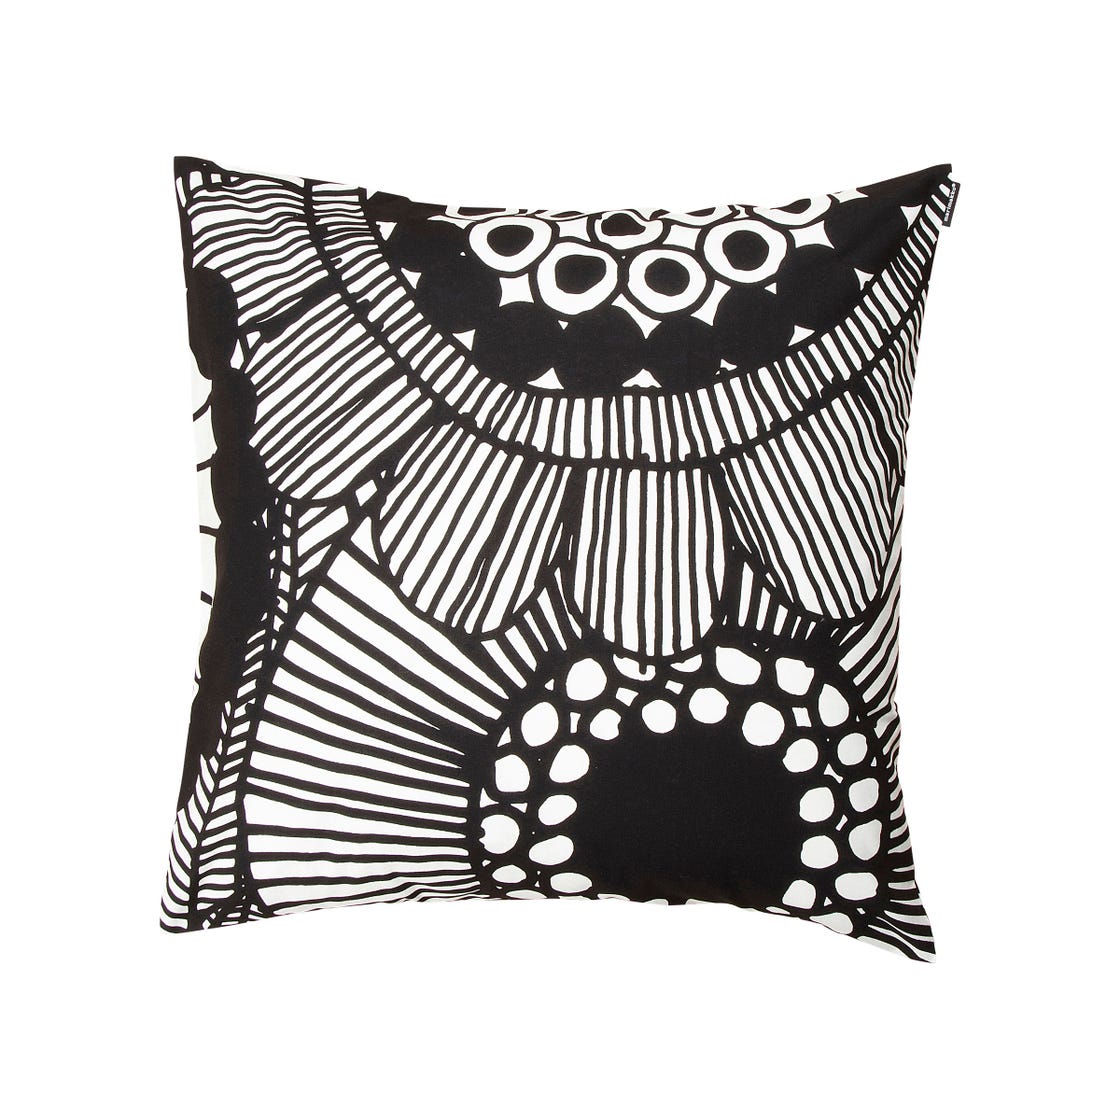 Siirtolapuutarha cushion / pillow cover 50x50 cm 067796